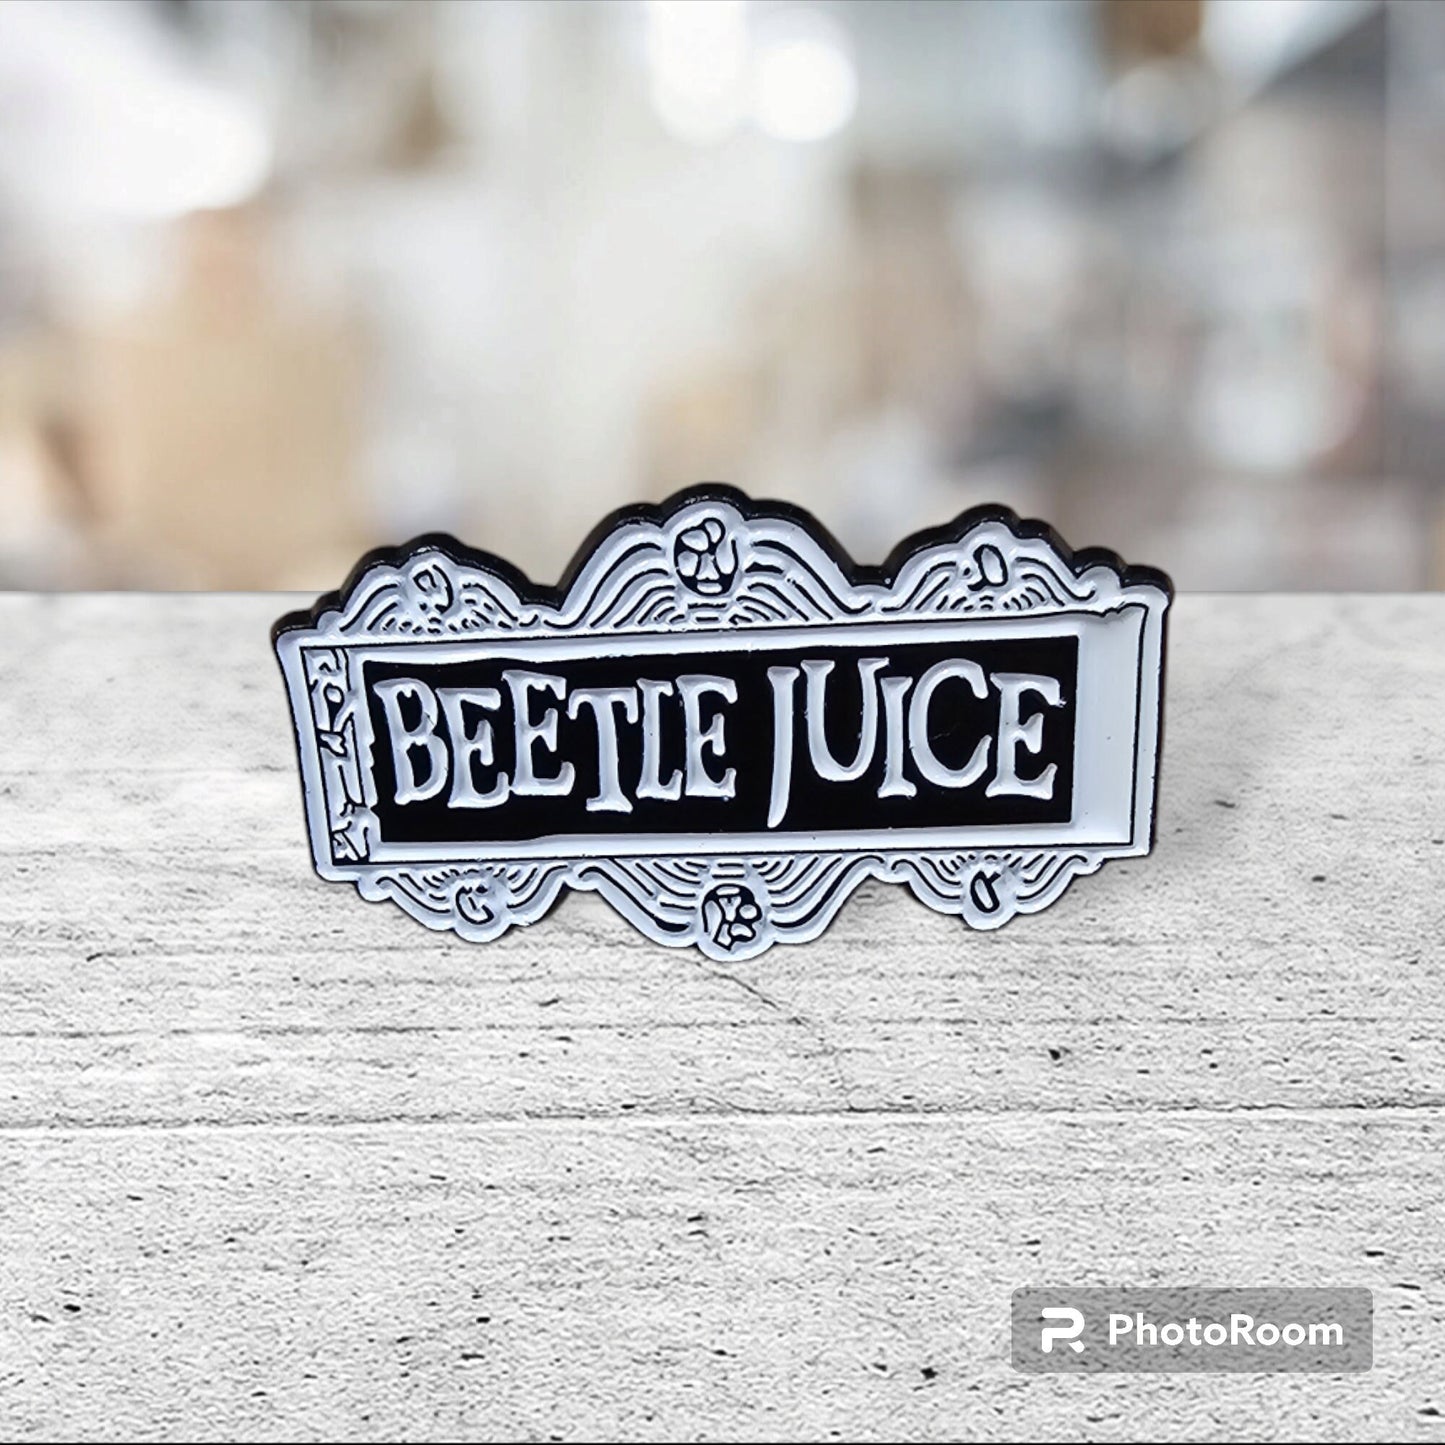 Beetlejuice Themed Pin